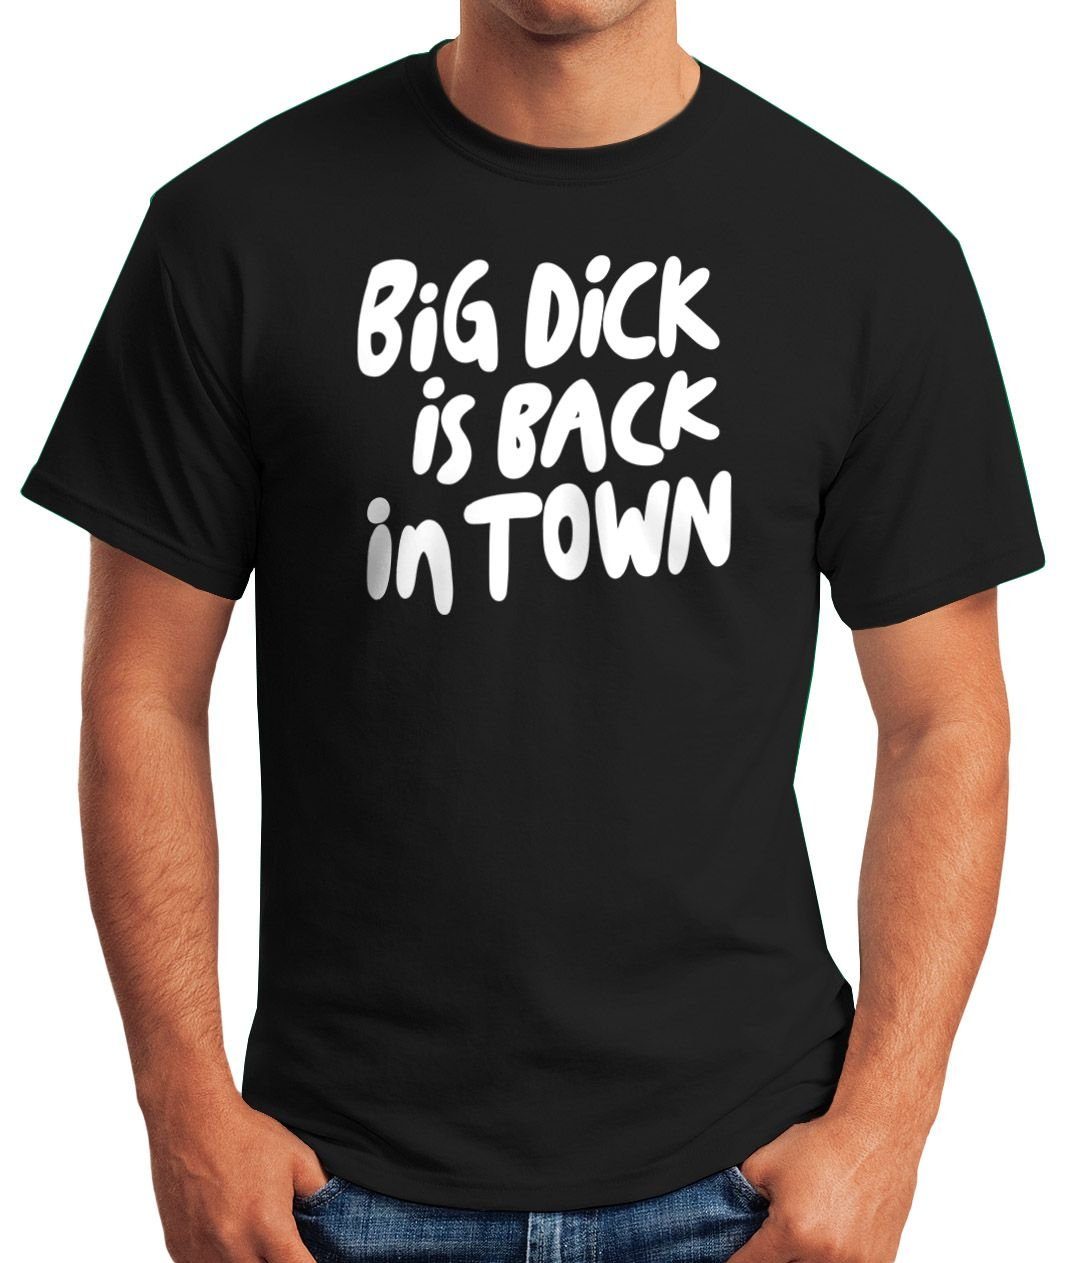 MoonWorks Print-Shirt Herren T-Shirt mit is Dick Print schwarz mit Spruch lustig Moonworks® Big Town back Ironie in Fun-Shirt